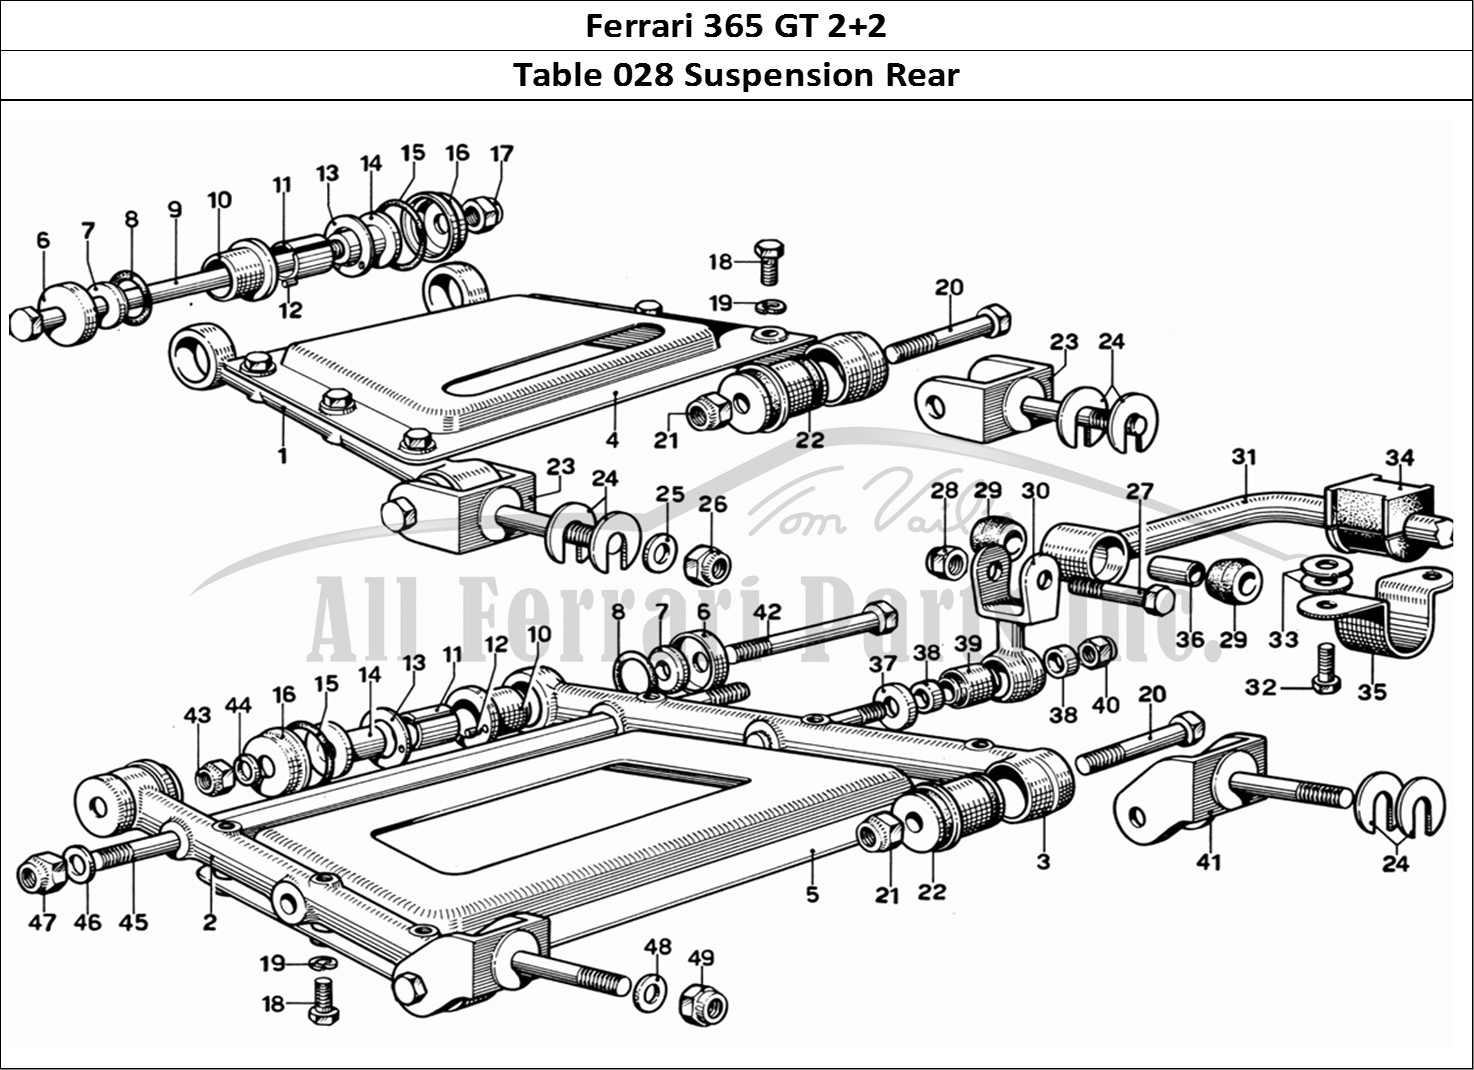 Ferrari Parts Ferrari 365 GT 2+2 (Mechanical) Page 028 Rear Suspension